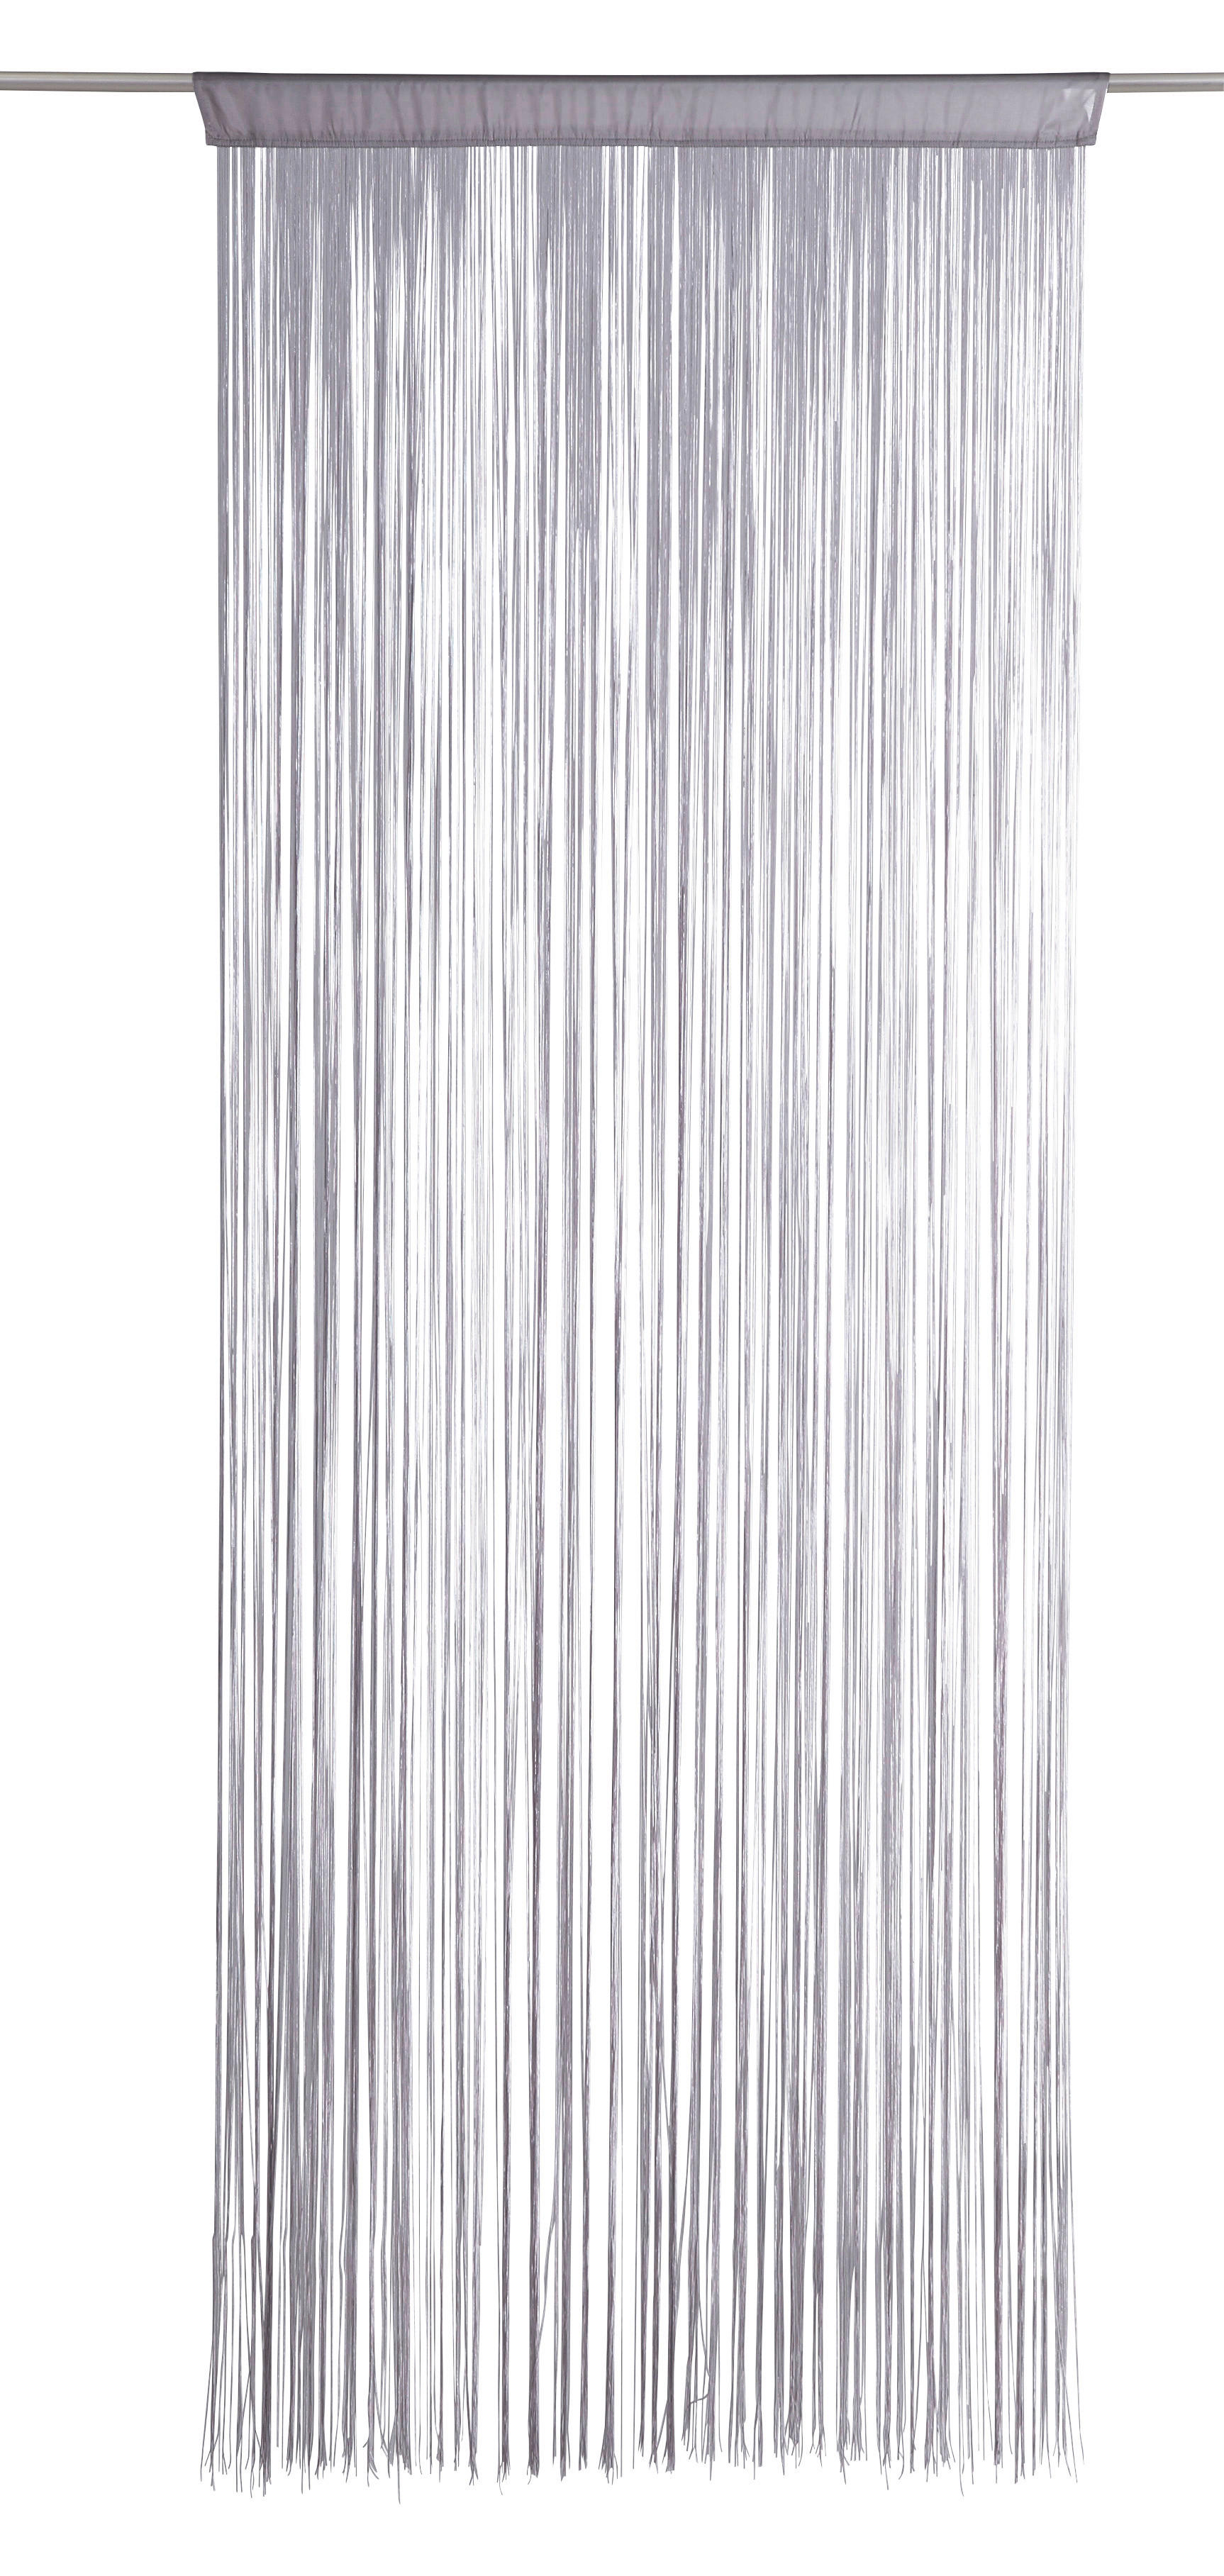 TRÅDGARDIN transparent  - silver, Basics, textil (90/245cm) - Best Price